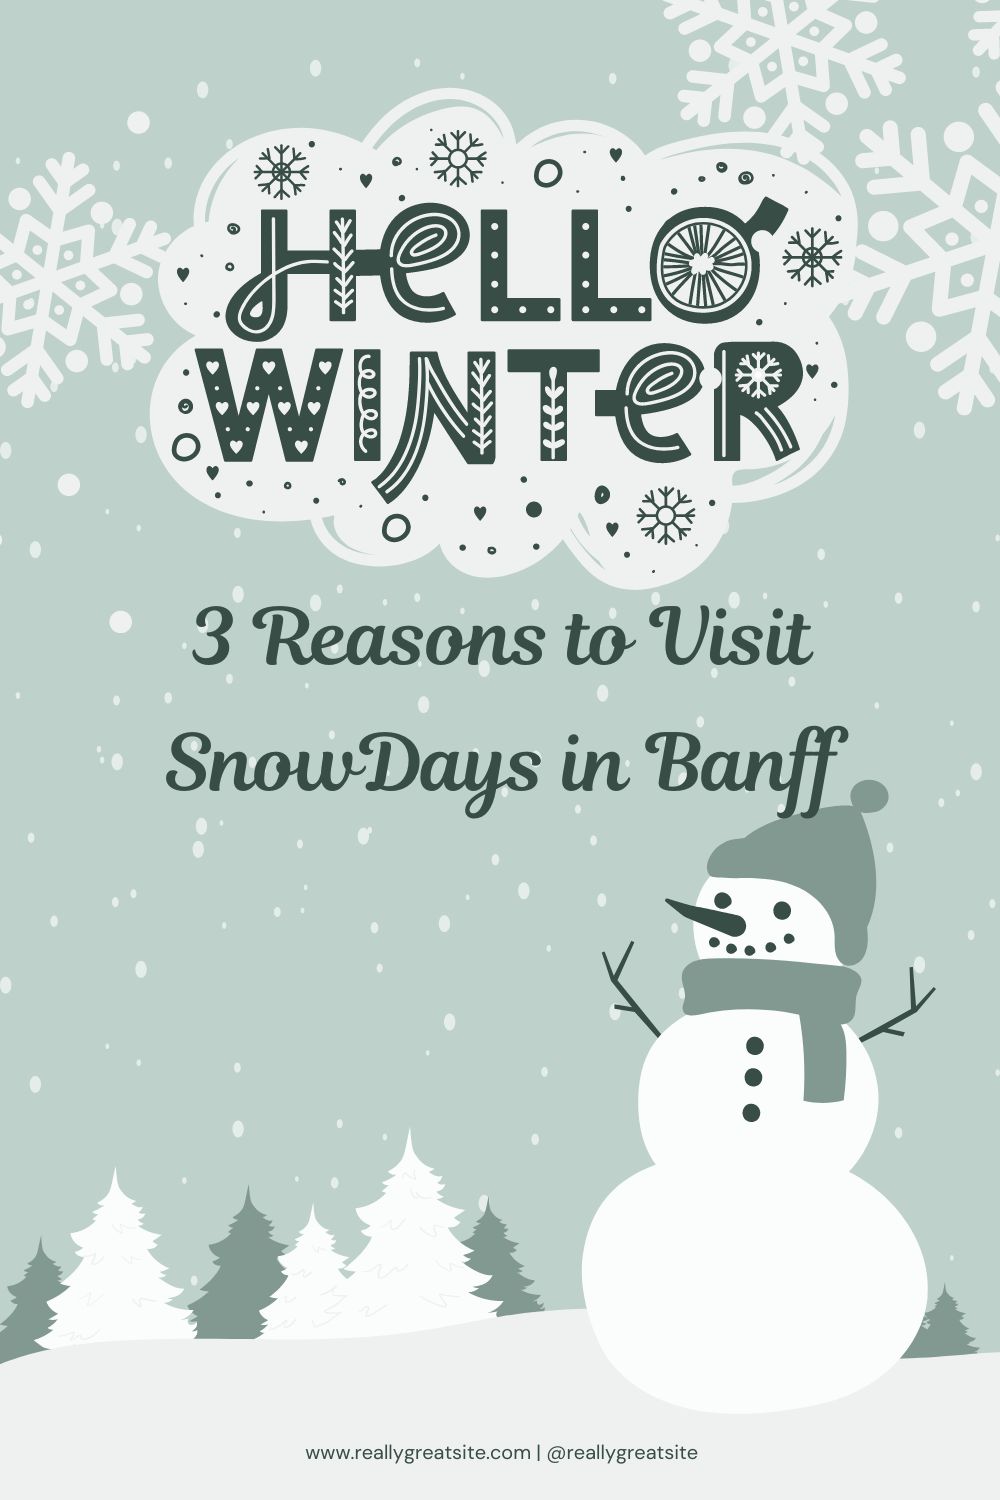 3 Reasons to Visit SnowDays in Banff